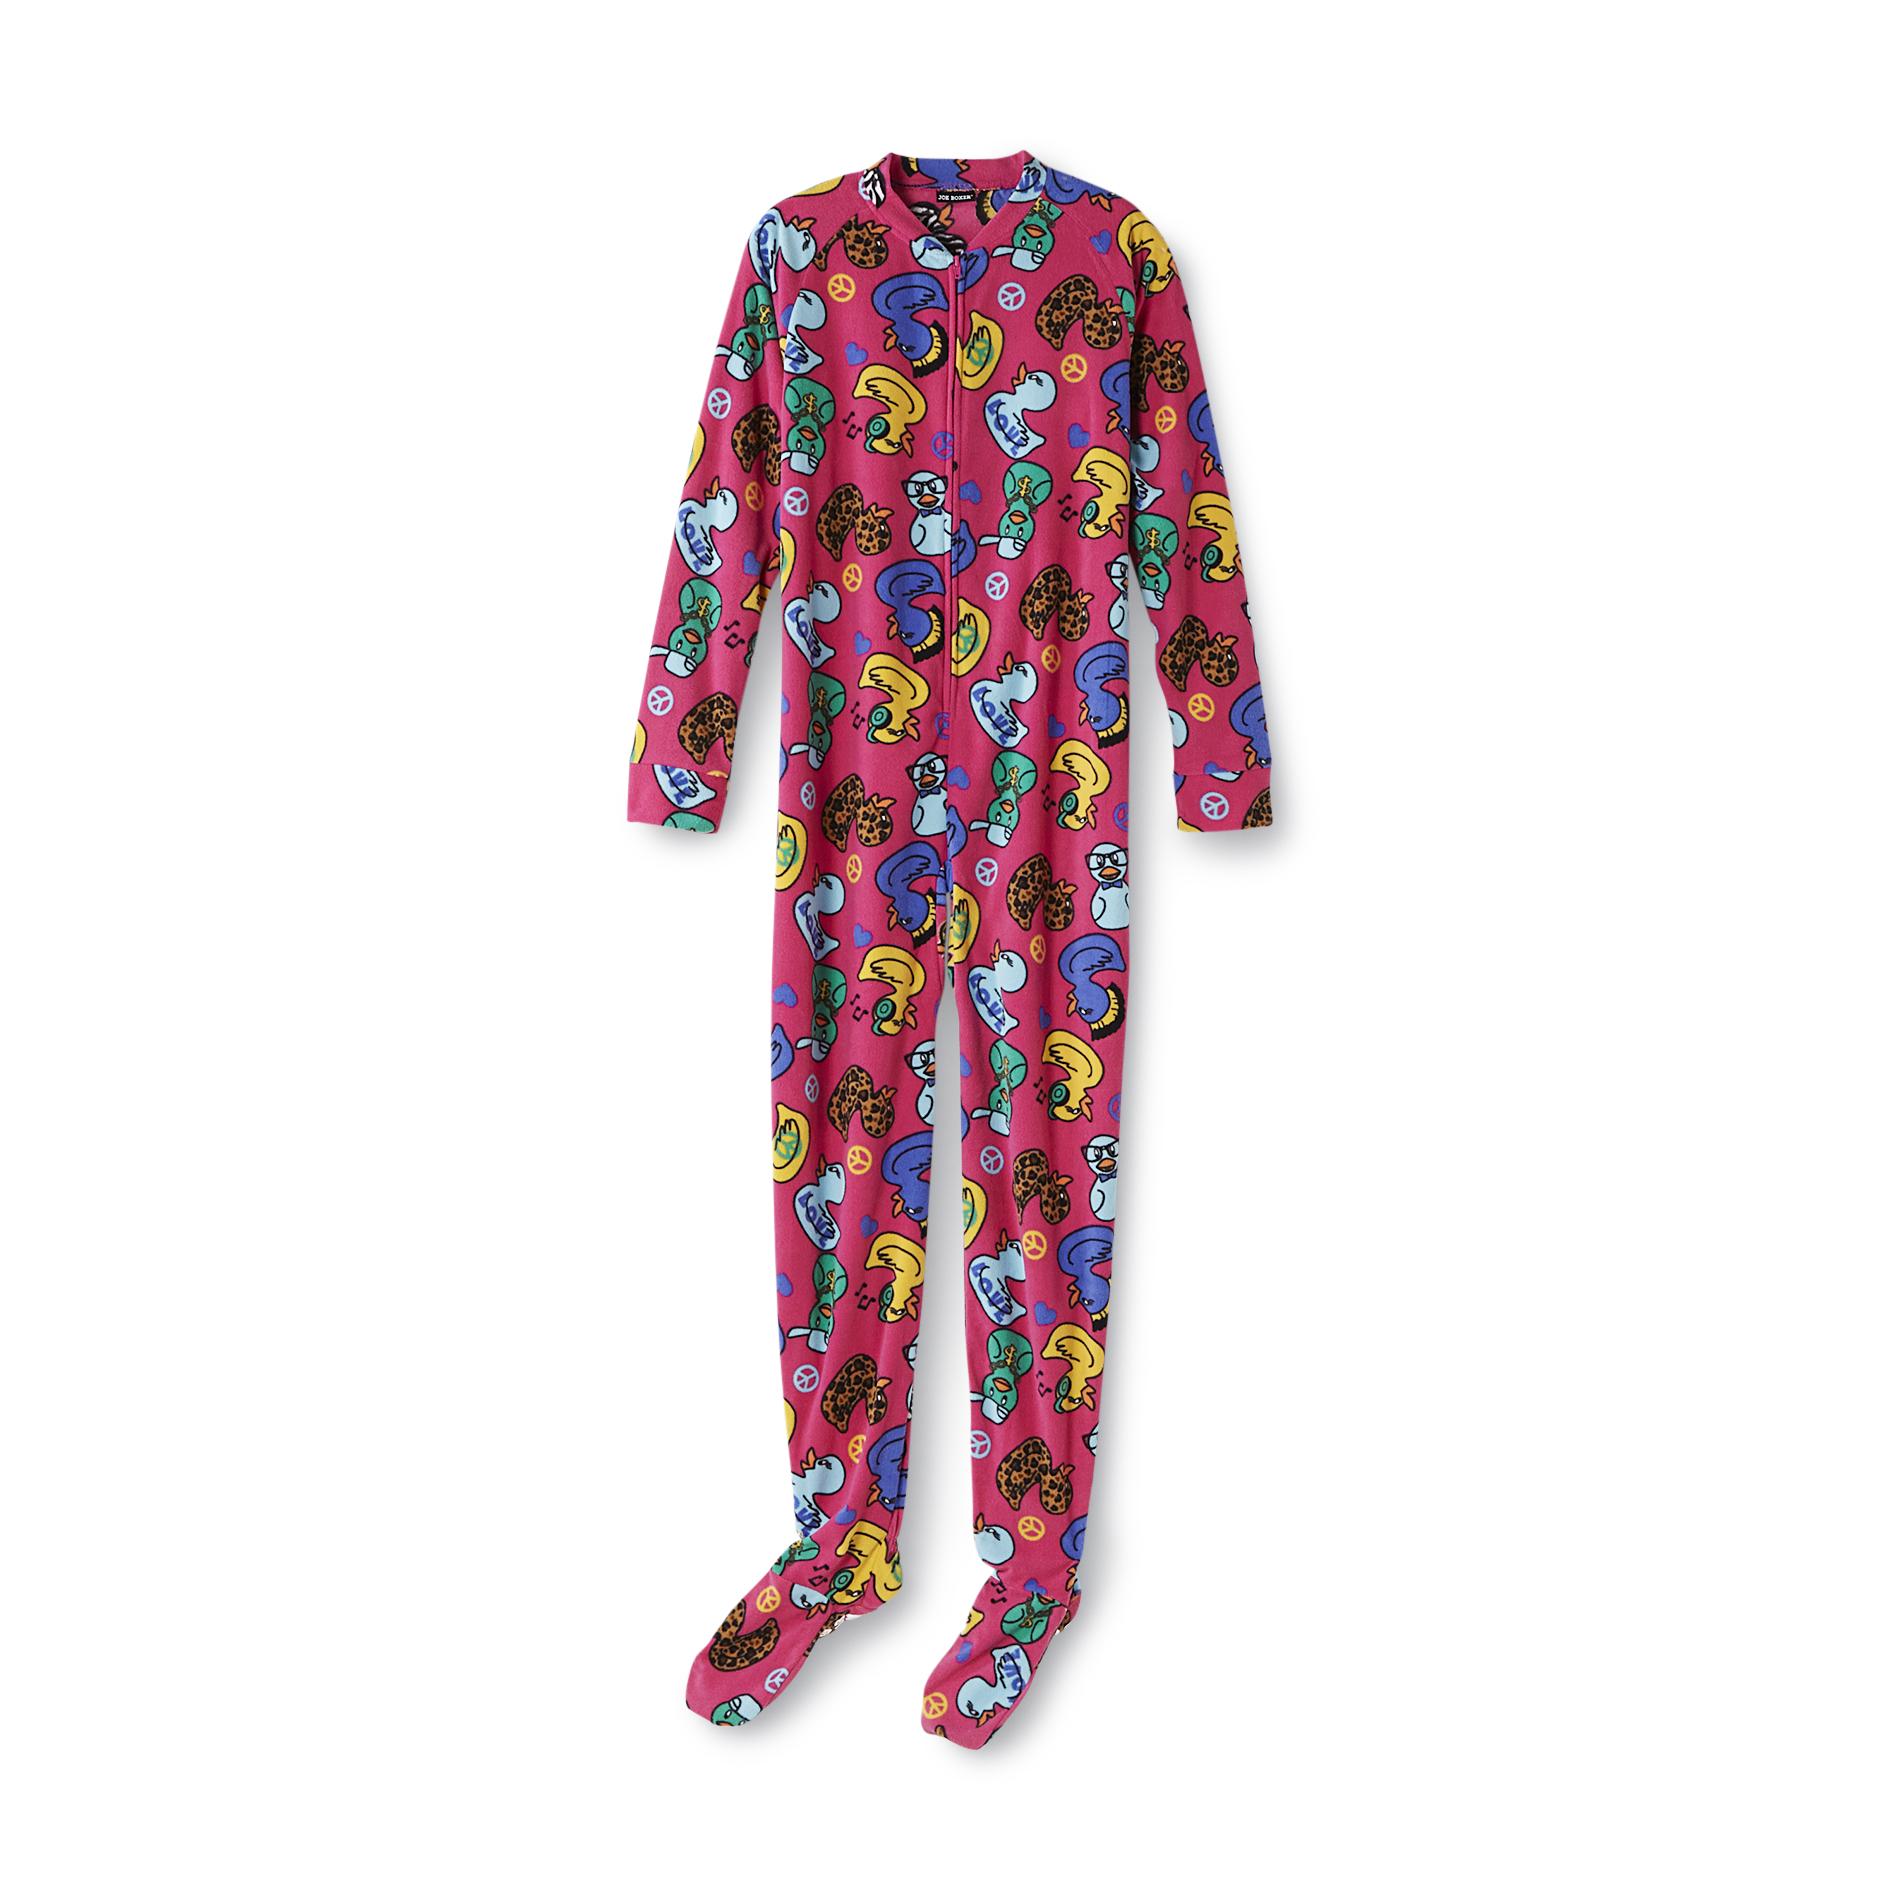 Joe Boxer Women's Fleece Footed Pajamas - Ducks